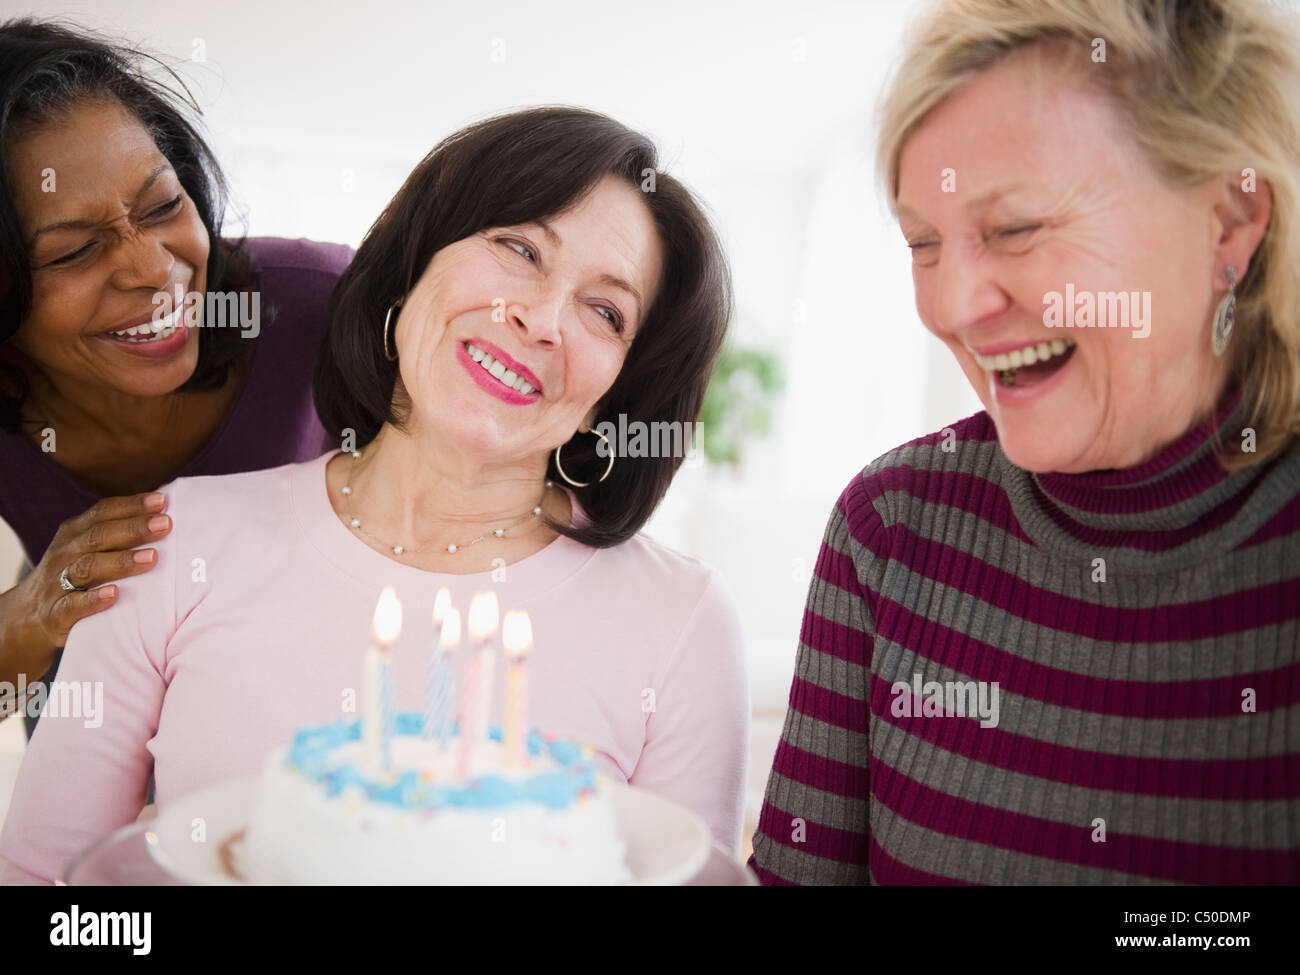 Women surprising friend with birthday cake Stock Photo